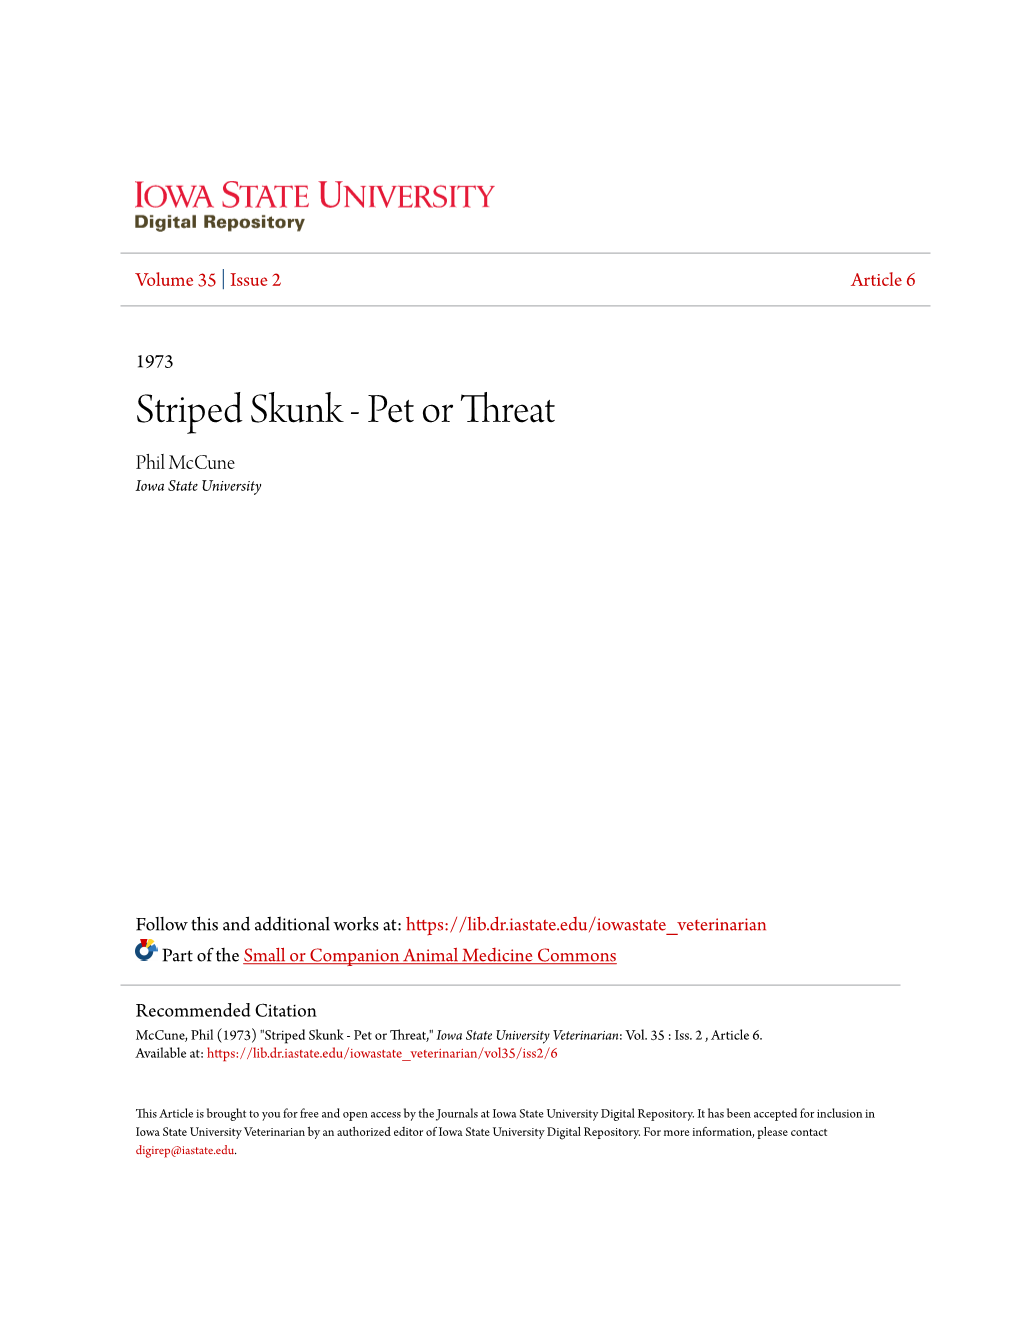 Striped Skunk - Pet Or Threat Phil Mccune Iowa State University